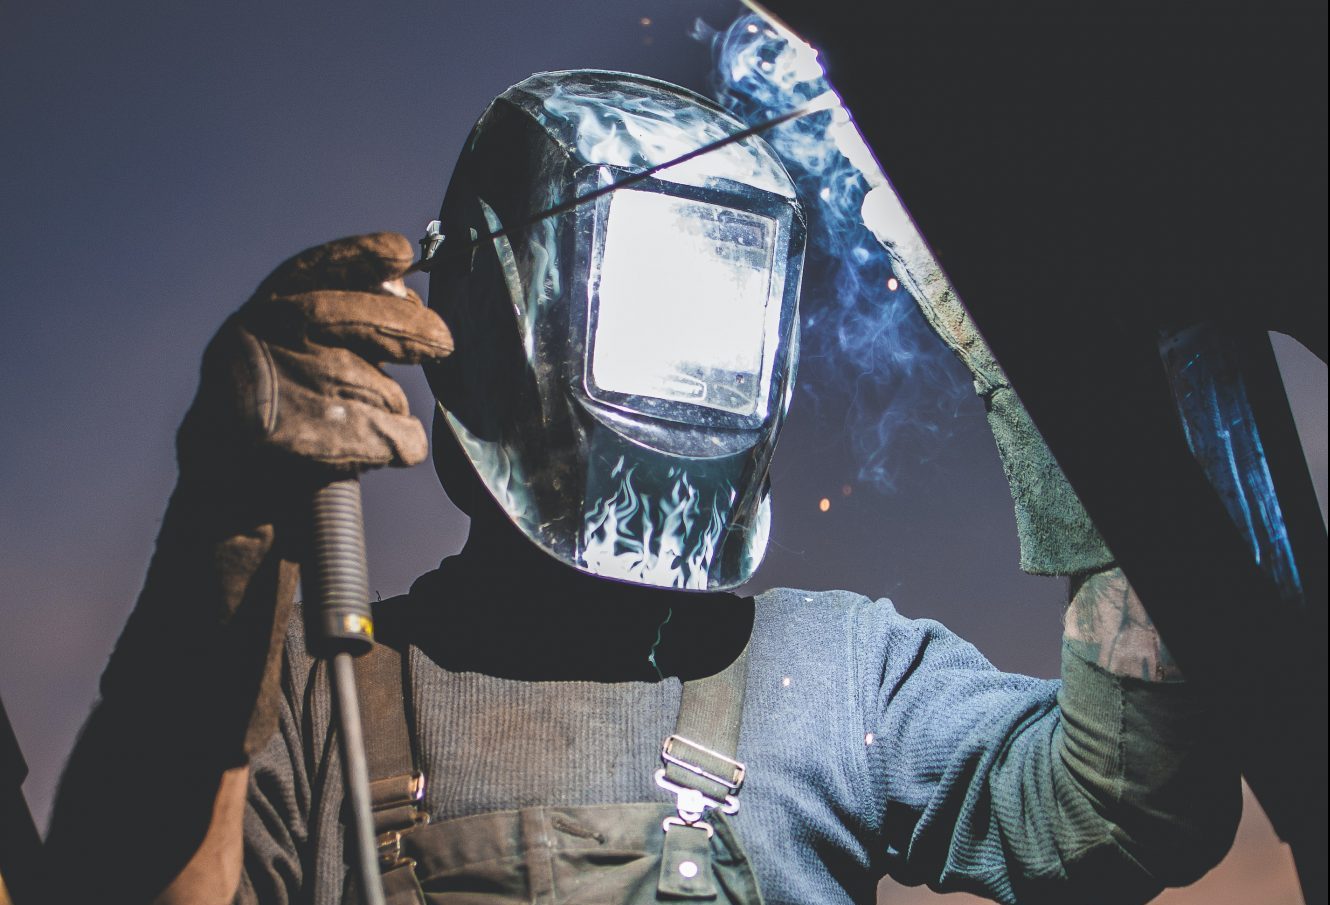 a person wearing an auto darkening welding helmet